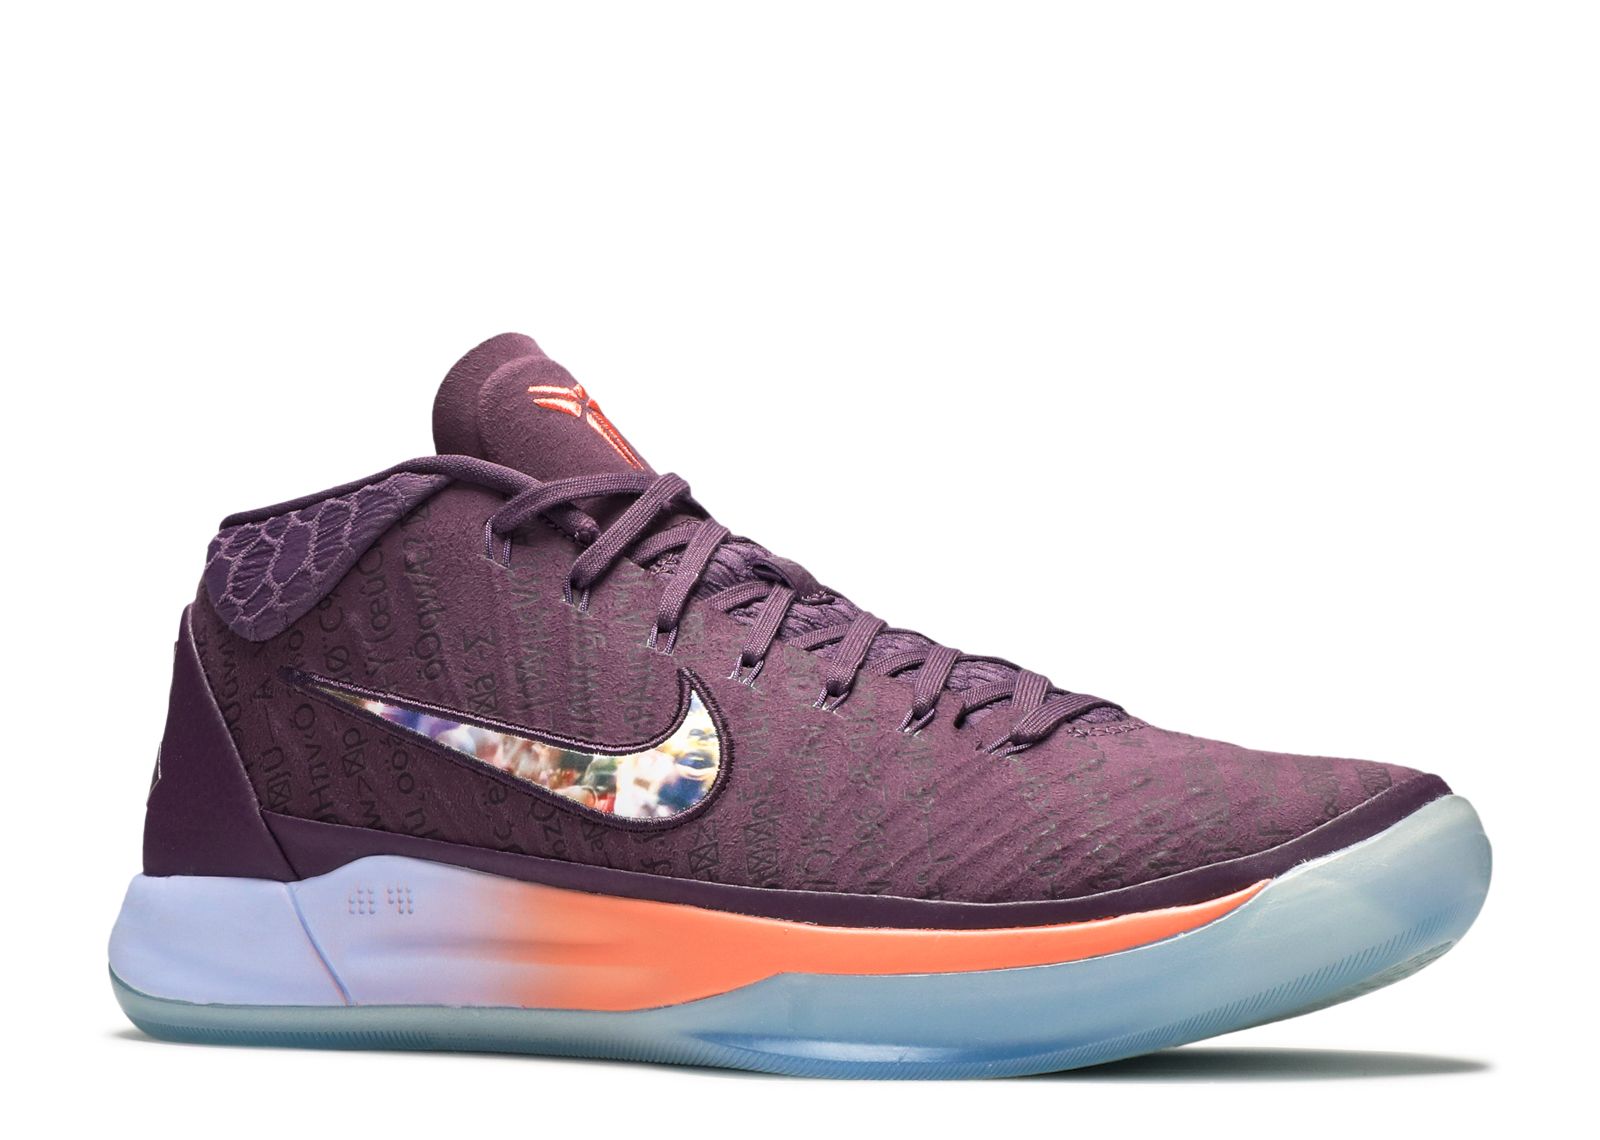 Kobe A.D. 'Devin Booker' PE - Nike - AQ2721 500 - pro purple/multi